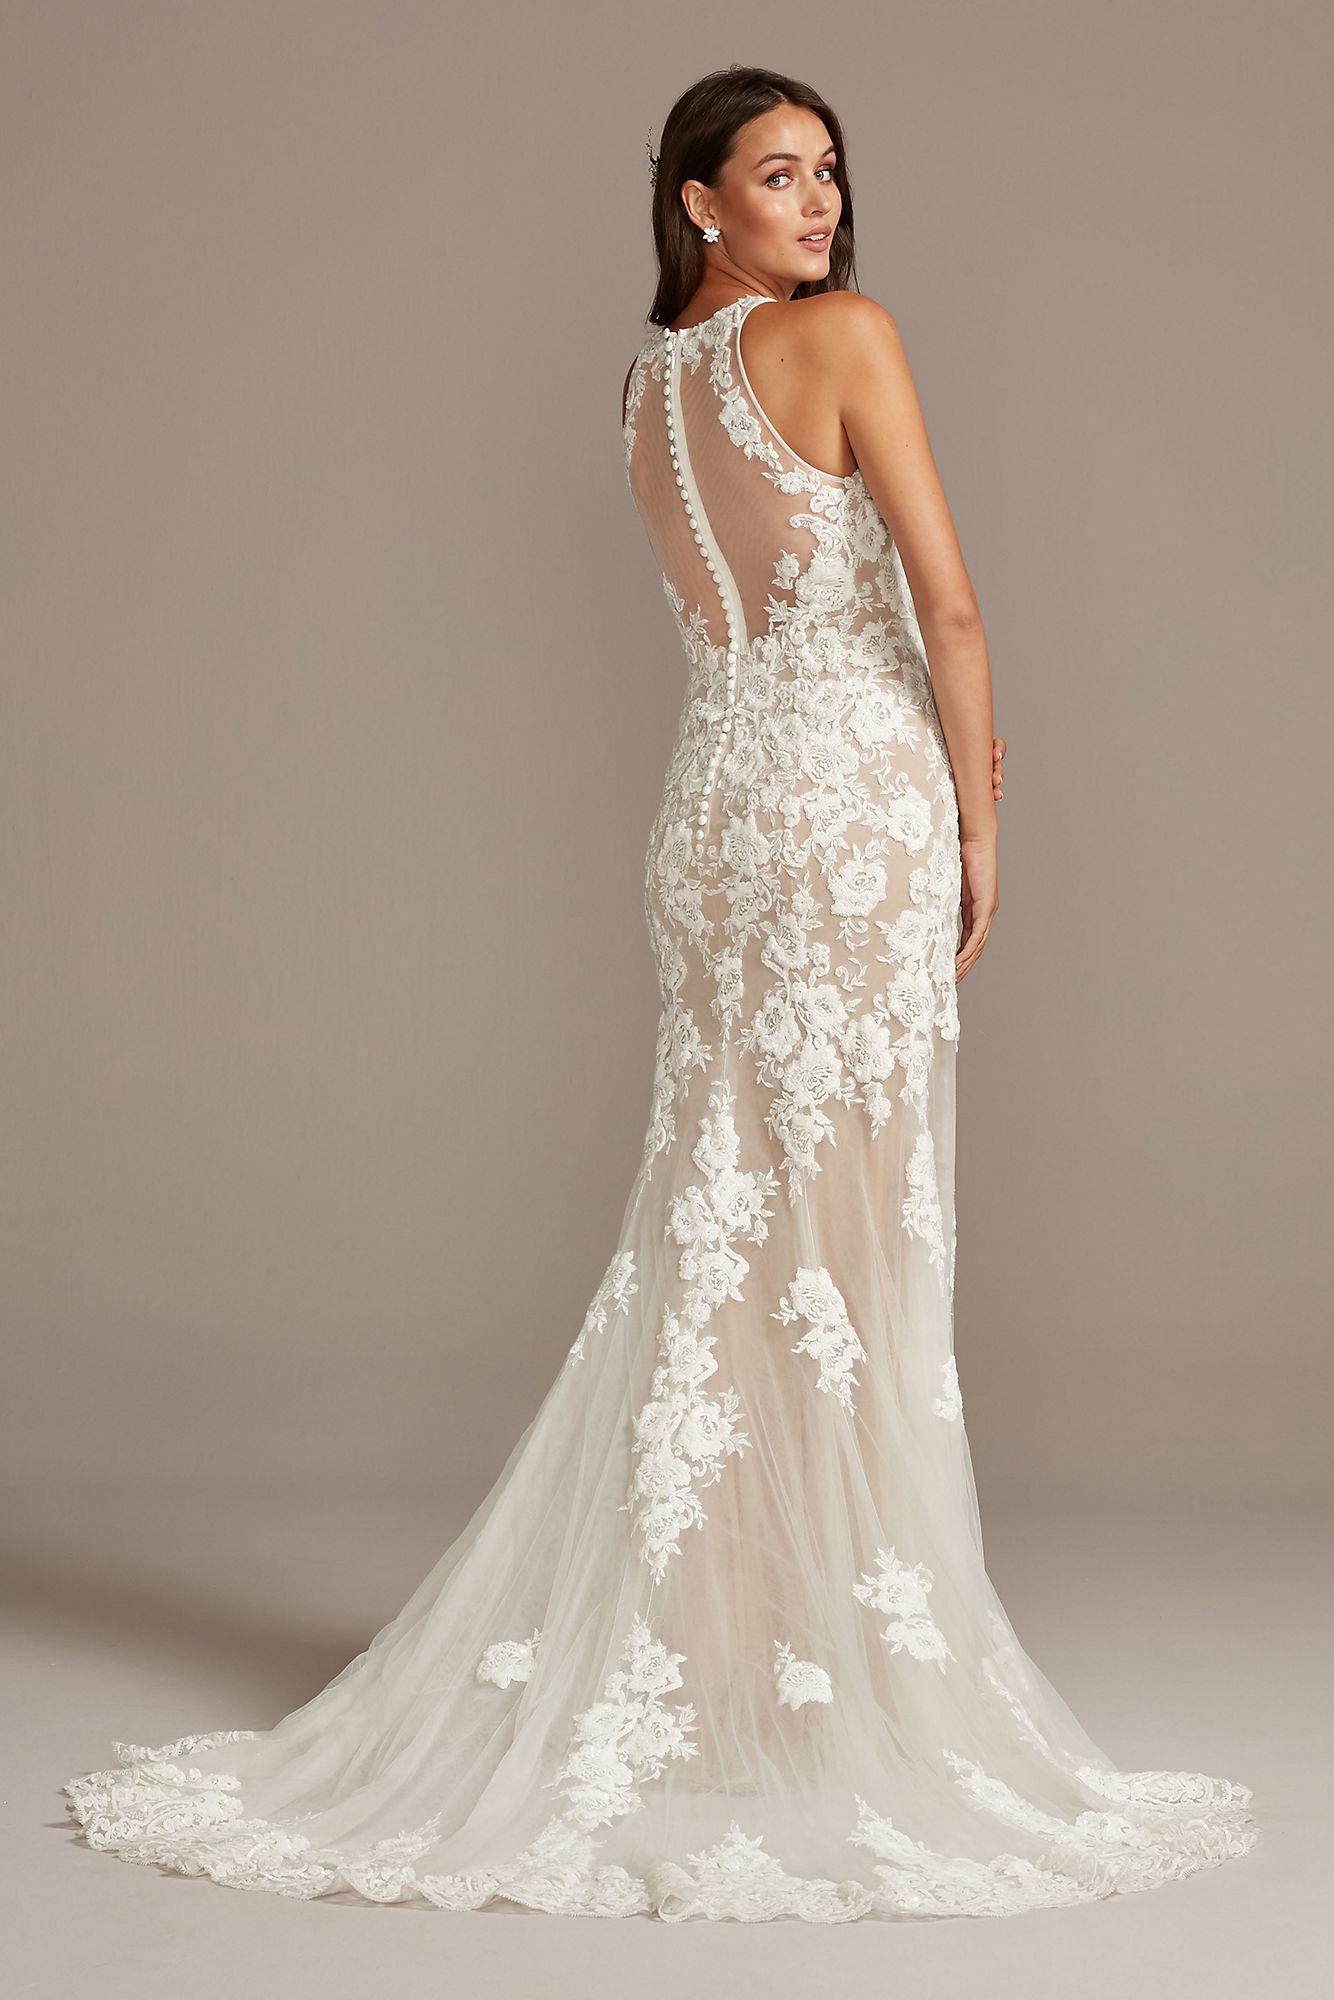 Illusion Keyhole Applique Tall 4XLSWG843 Style Wedding Dress